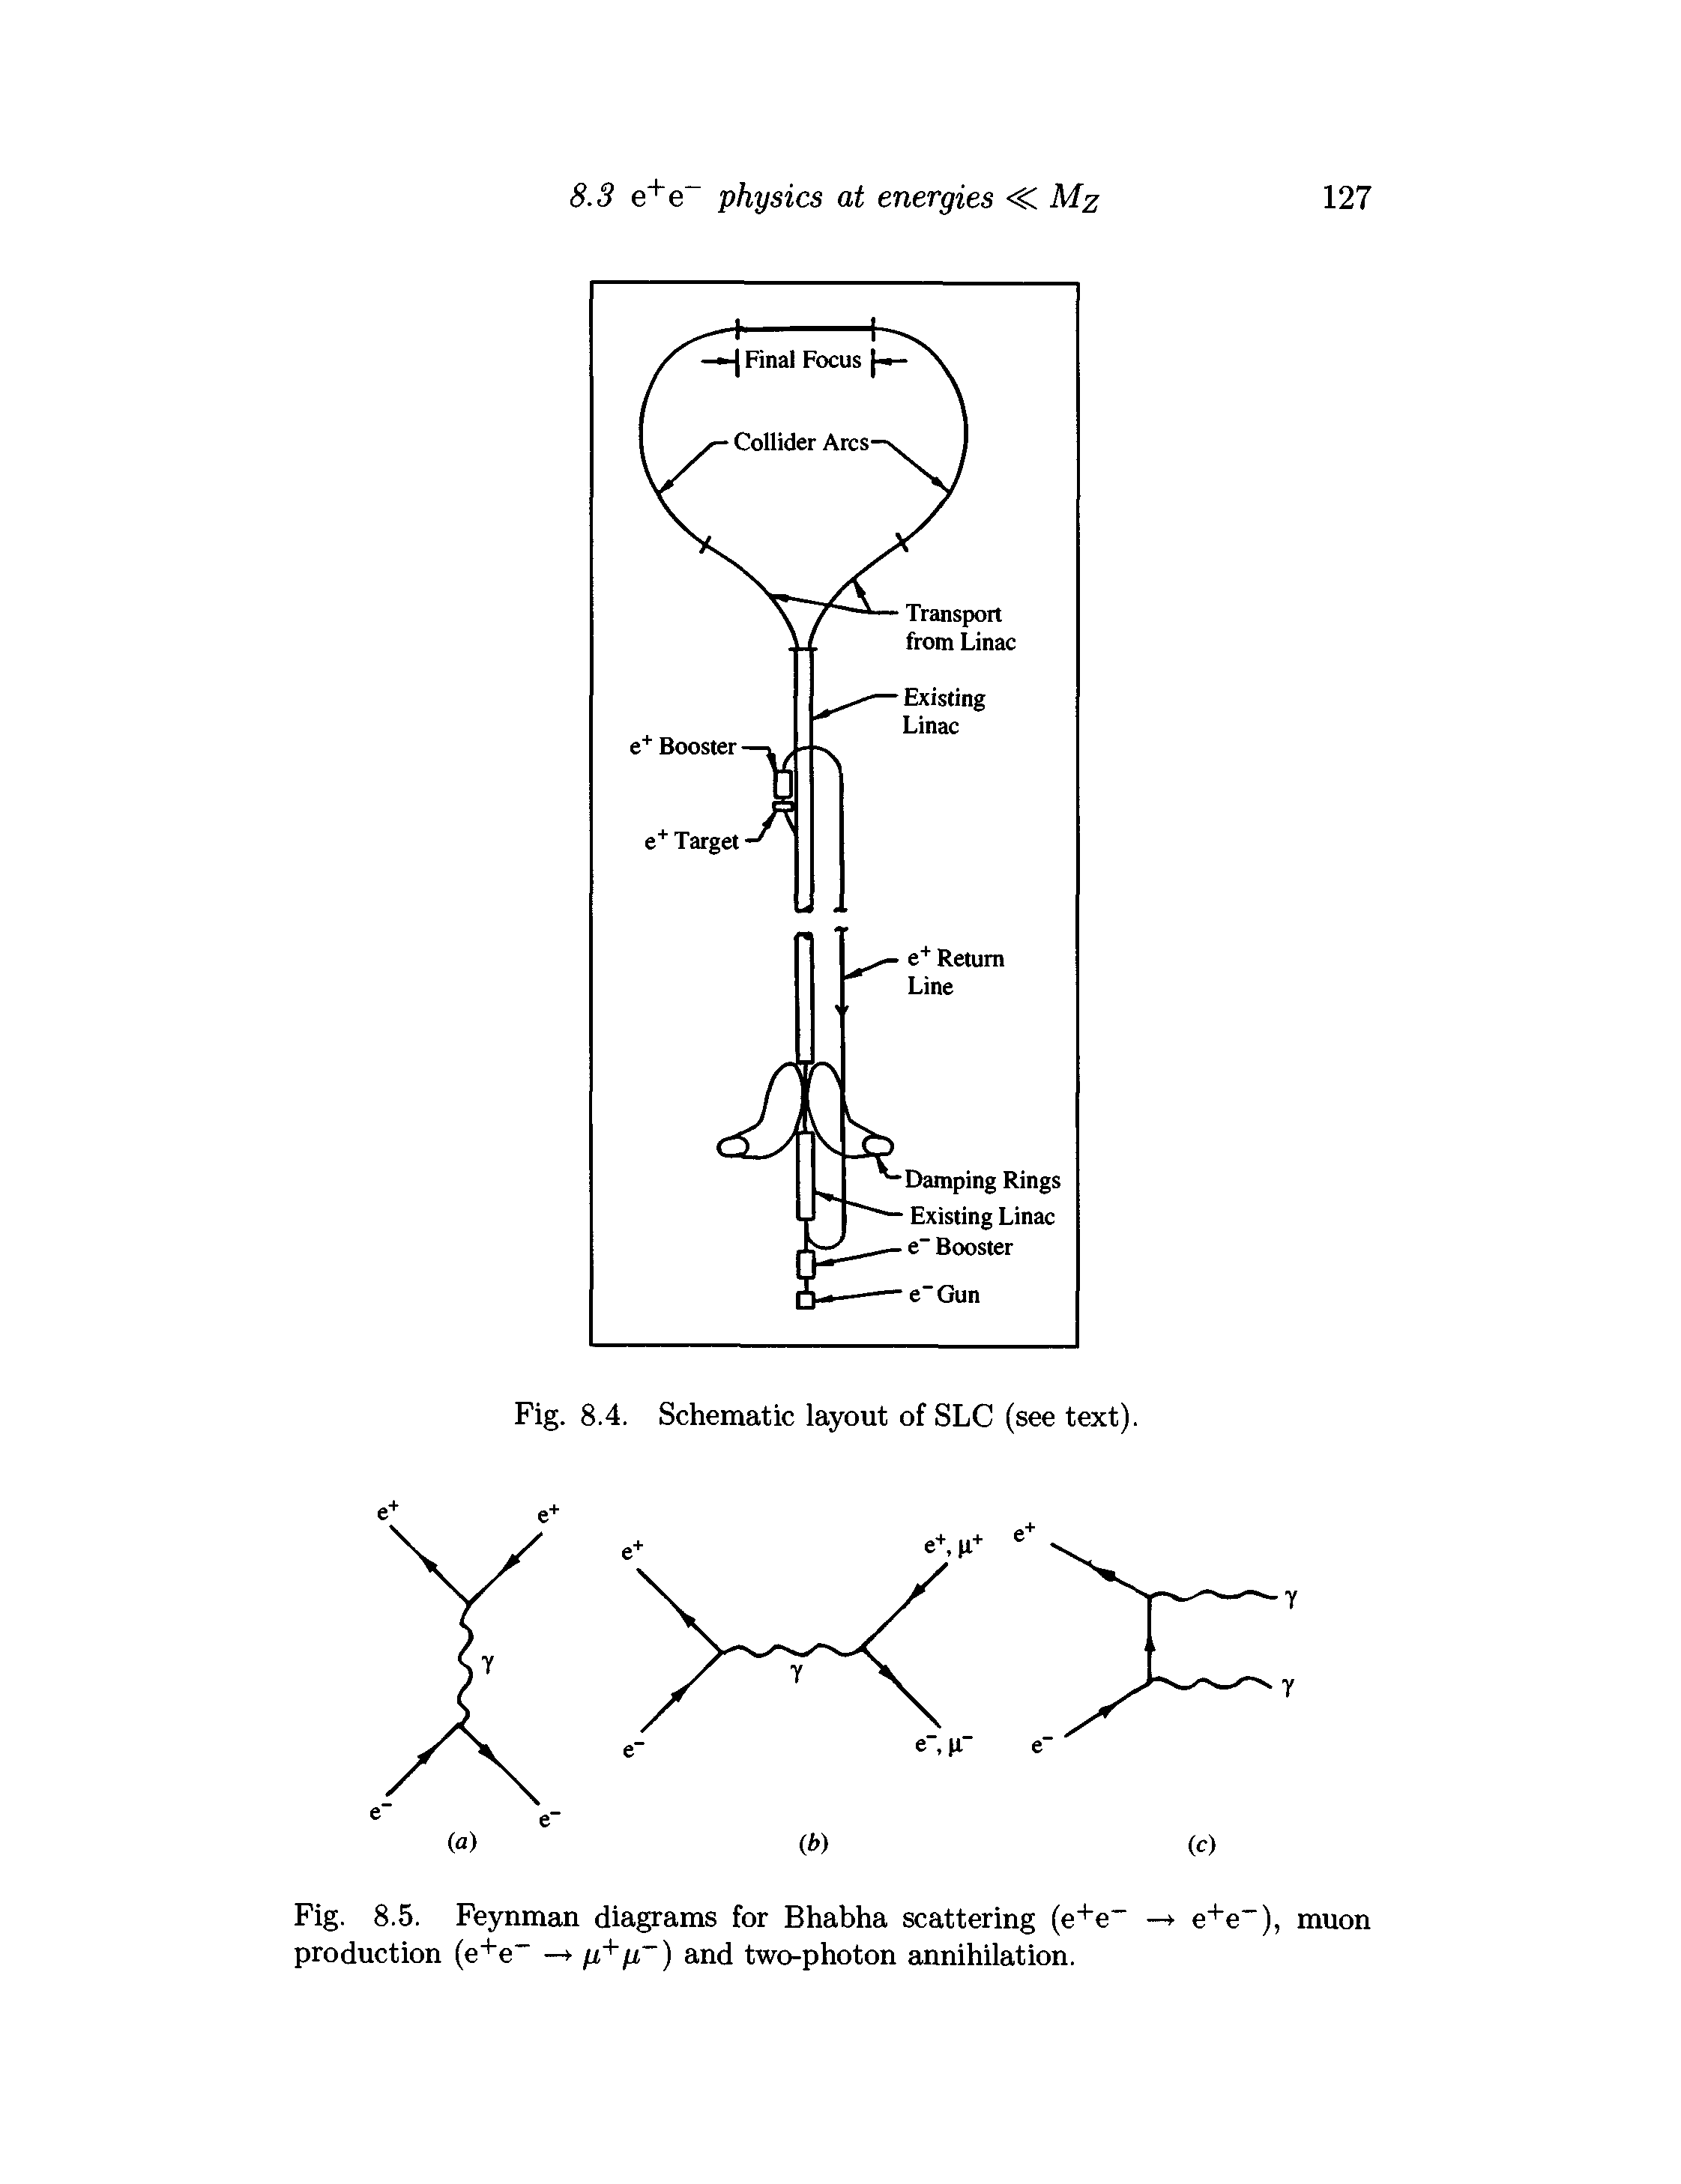 Fig. 8.5. Feynman diagrams for Bhabha scattering (e+e" — e+e"), muon production (e+e" — and two-photon annihilation.